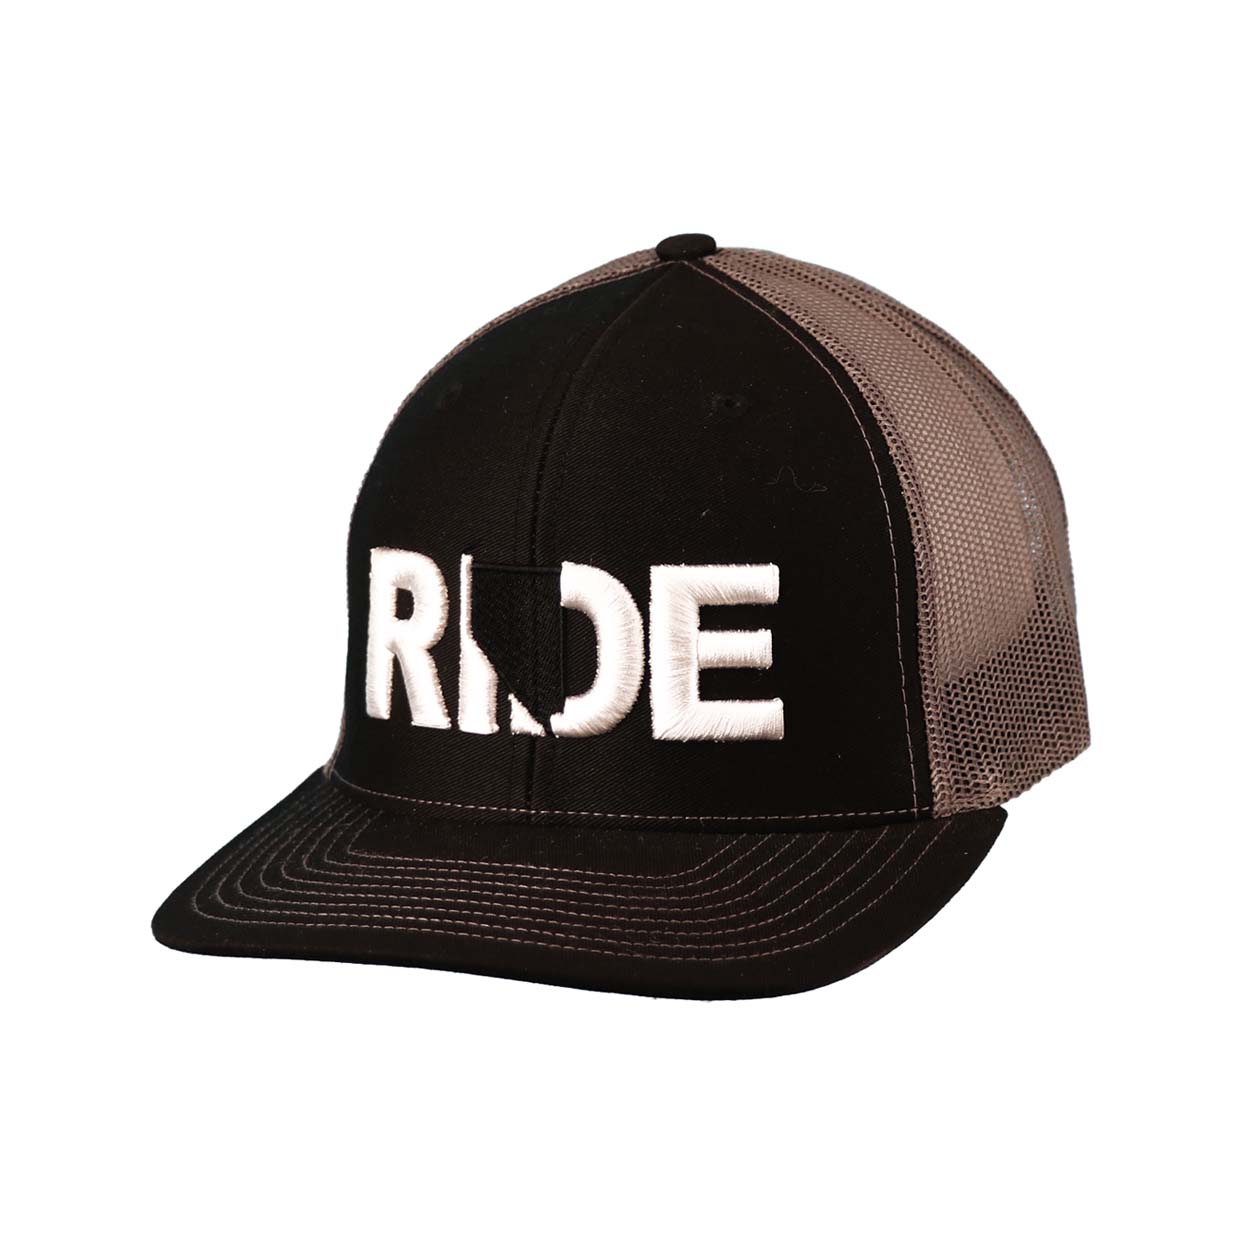 Ride Nevada Classic Embroidered Snapback Trucker Hat Black/Gray